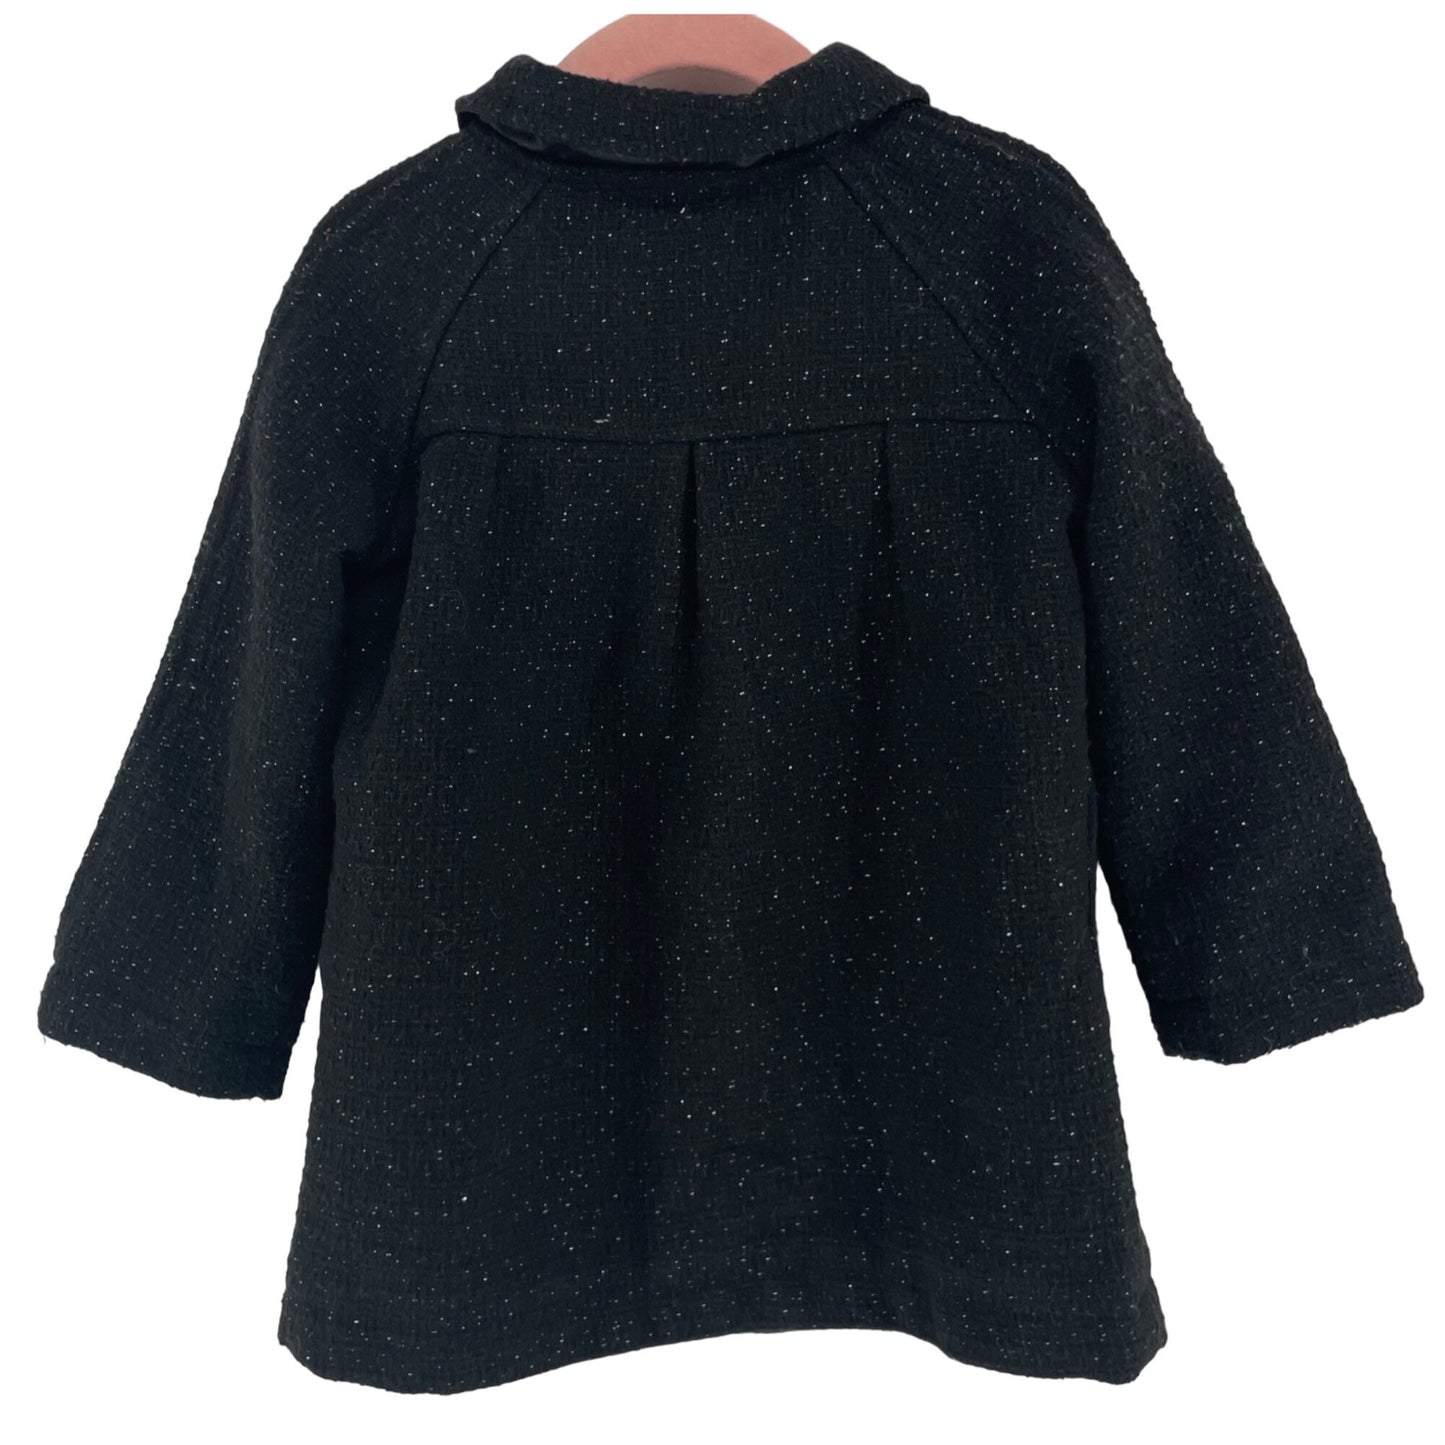 Gymboree Girl's Size 2 Toddler Black Tweed & Silver Sparkly Wool Blend Coat